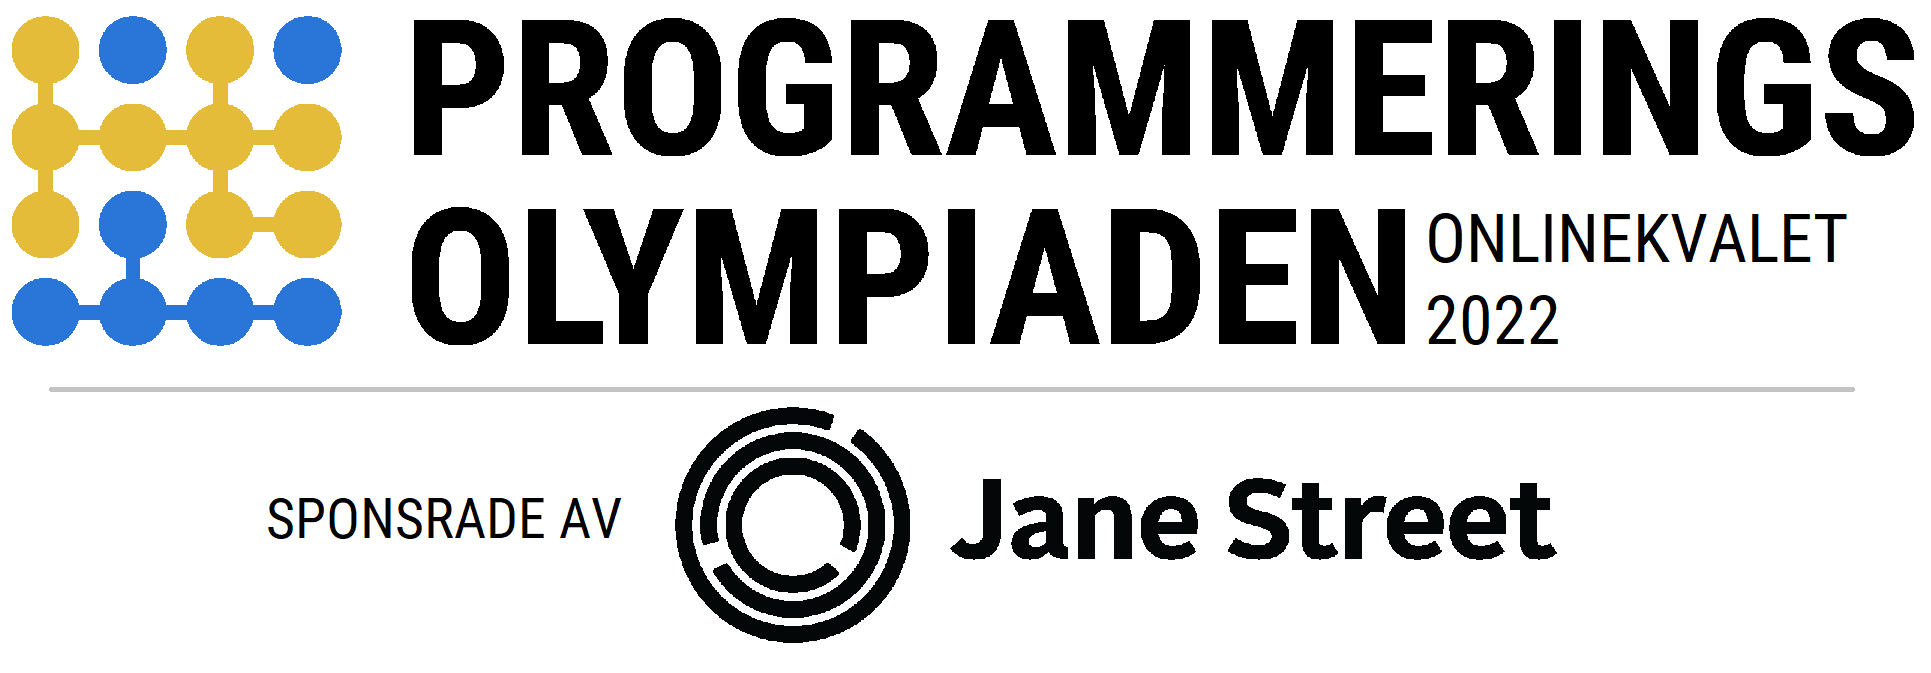 Programmeringsolympiadens onlinekval 2022